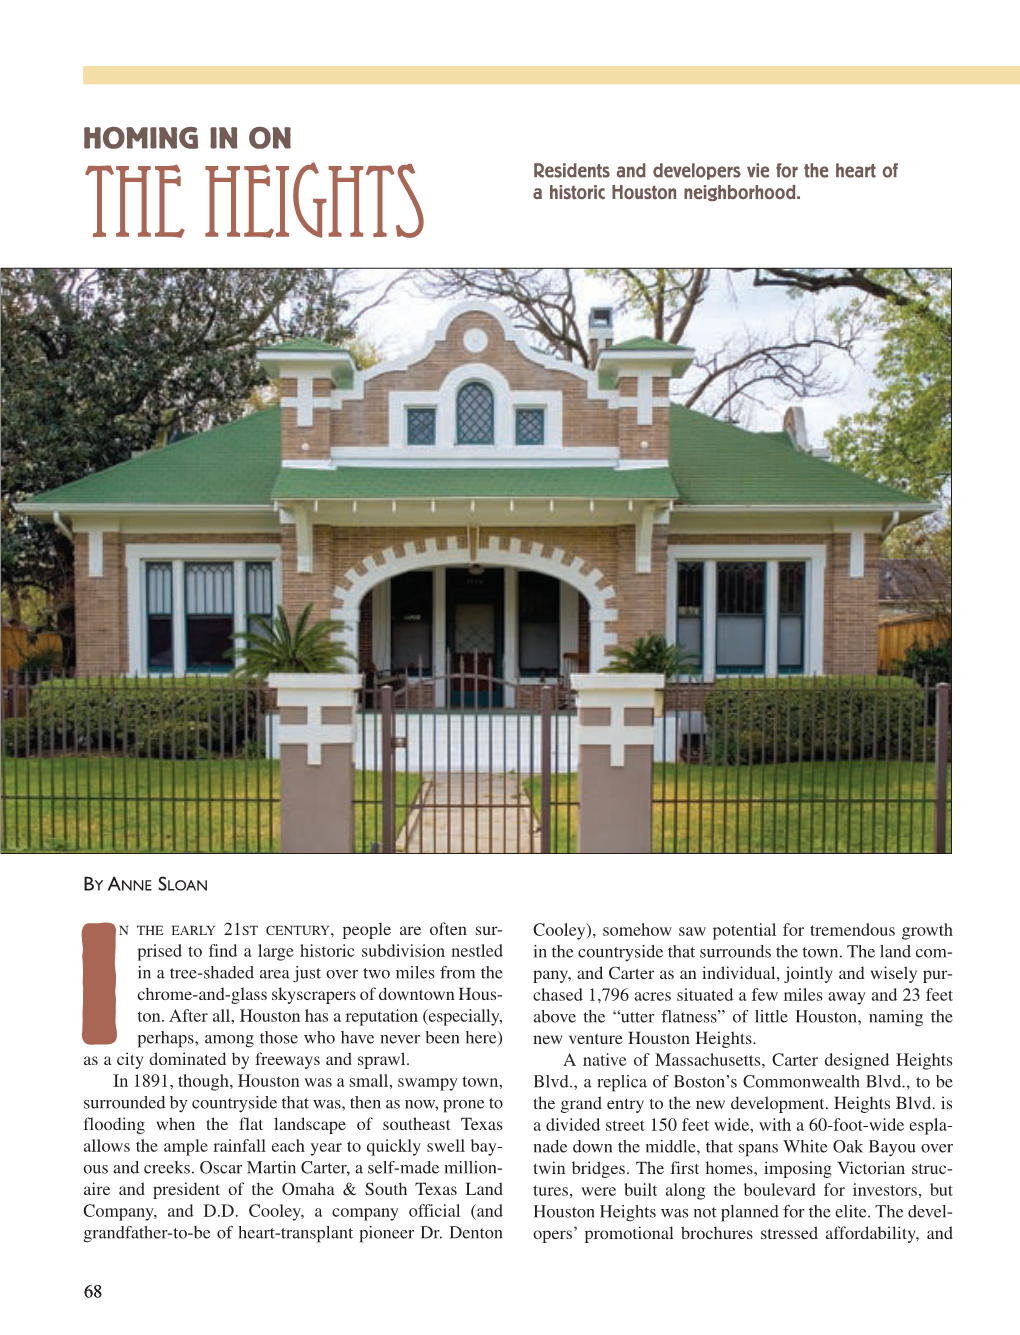 The Heights a Historic Houston Neighborhood